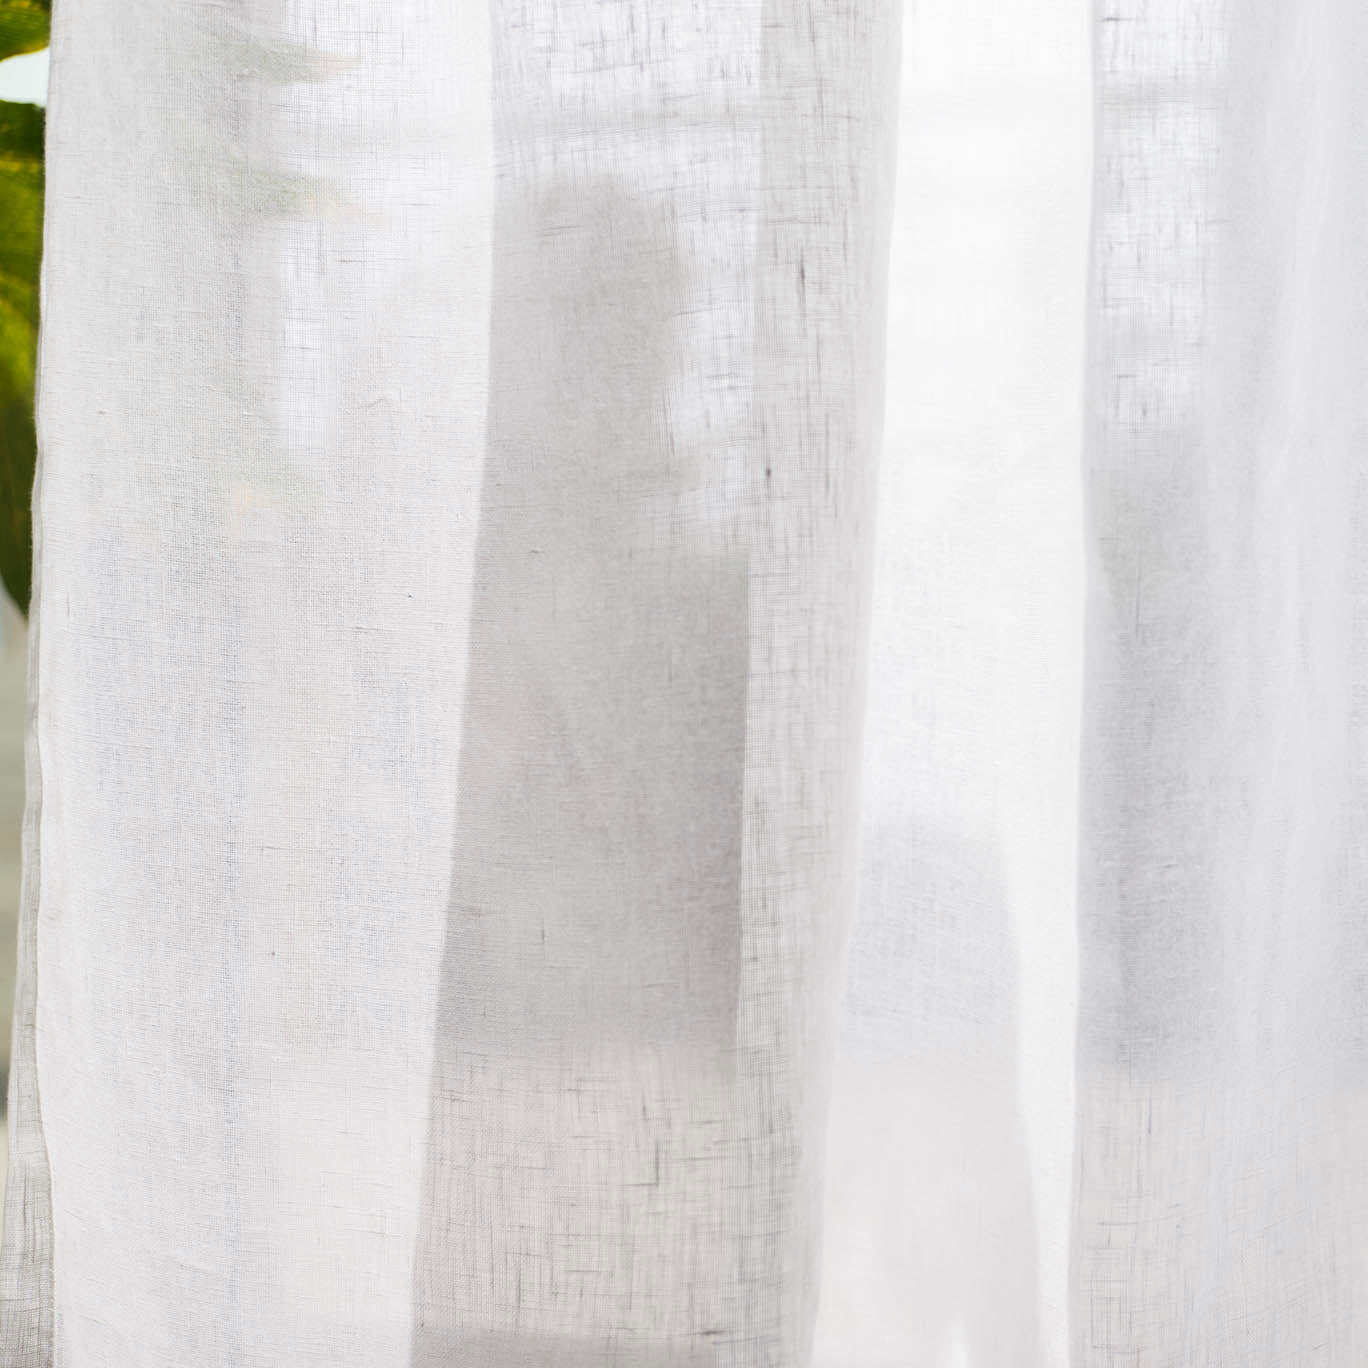 ANTWERP - 100% Belgian Linen Sheer Curtains - WhiteAntwerp collection, featuring 100% Belgian linen, woven in one of the six Belgium Linen factory in Belgium with 150 years of linen weaving history.Material: 100% BelDecorPassionsANTWERP - 100% Belgian Linen Sheer Curtains - White